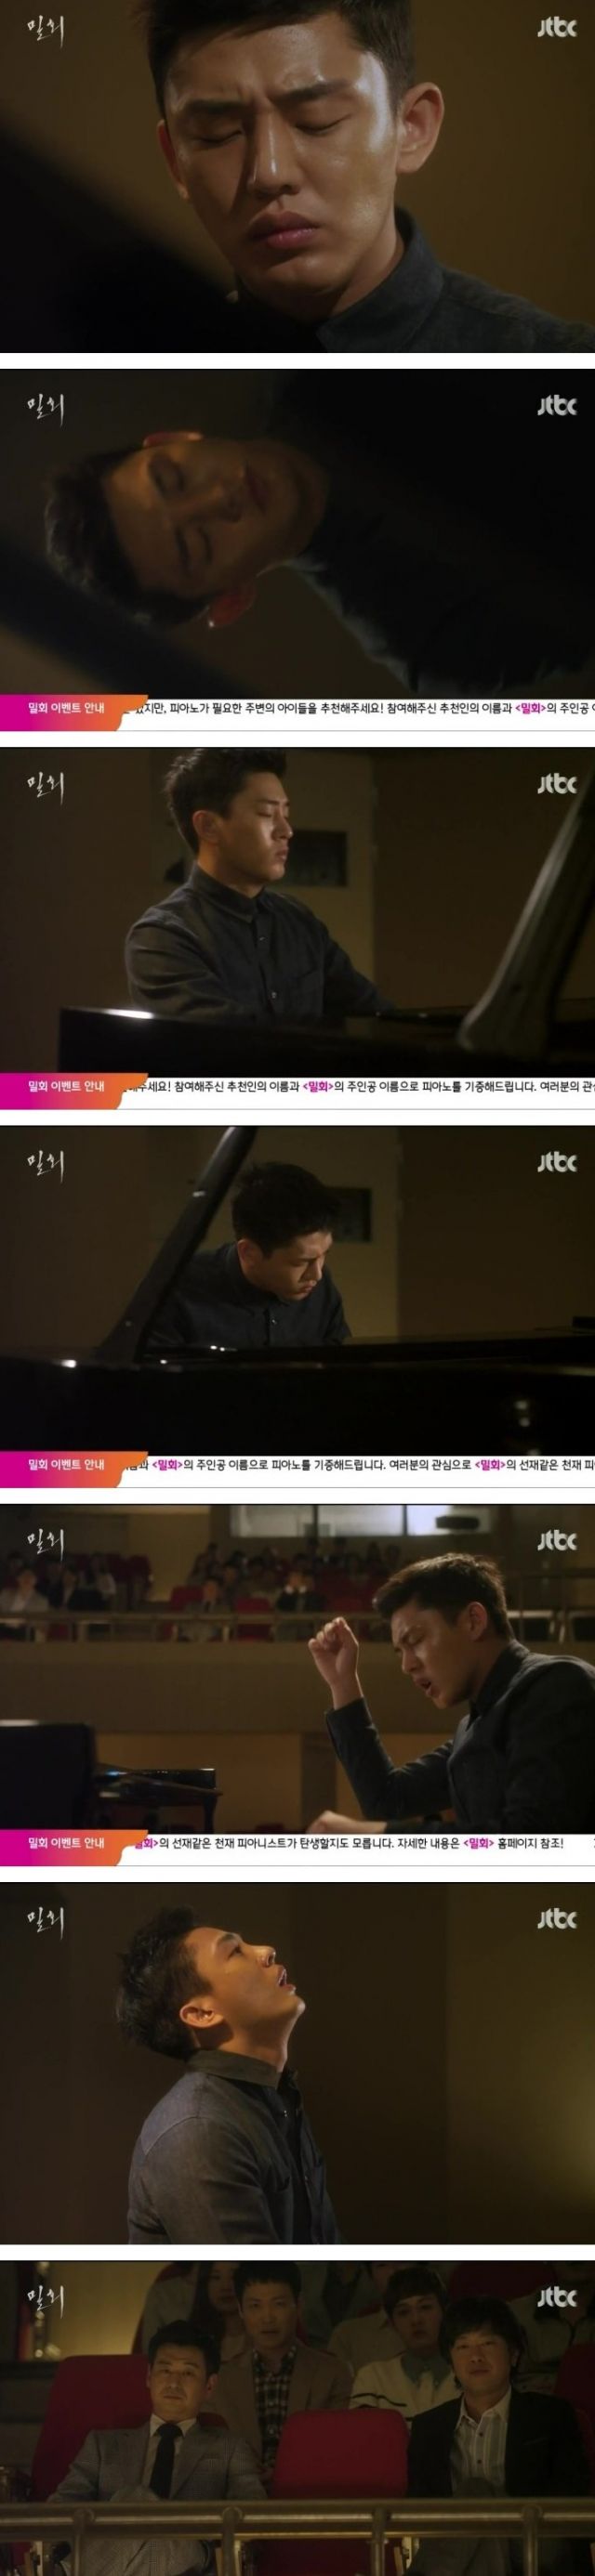 episode 7 captures for the Korean drama 'Secret Love Affair'